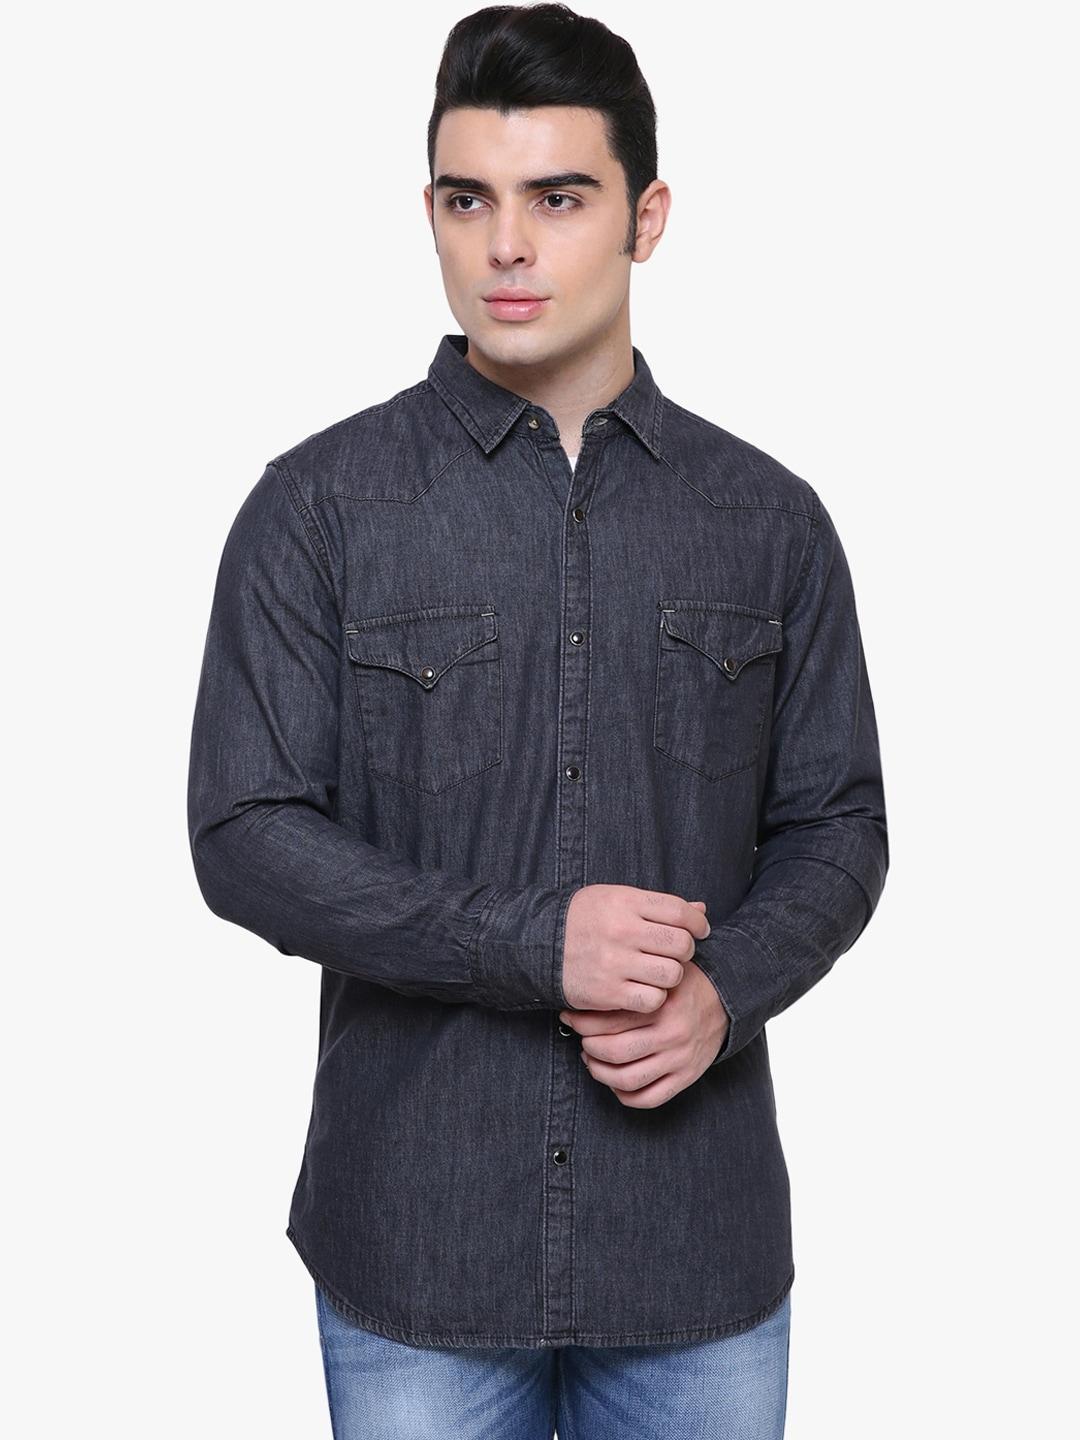 southbay-men-charcoal-grey-slim-fit-solid-denim-shirt